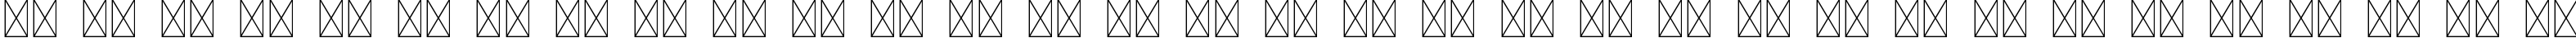 Пример написания русского алфавита шрифтом COMPANY